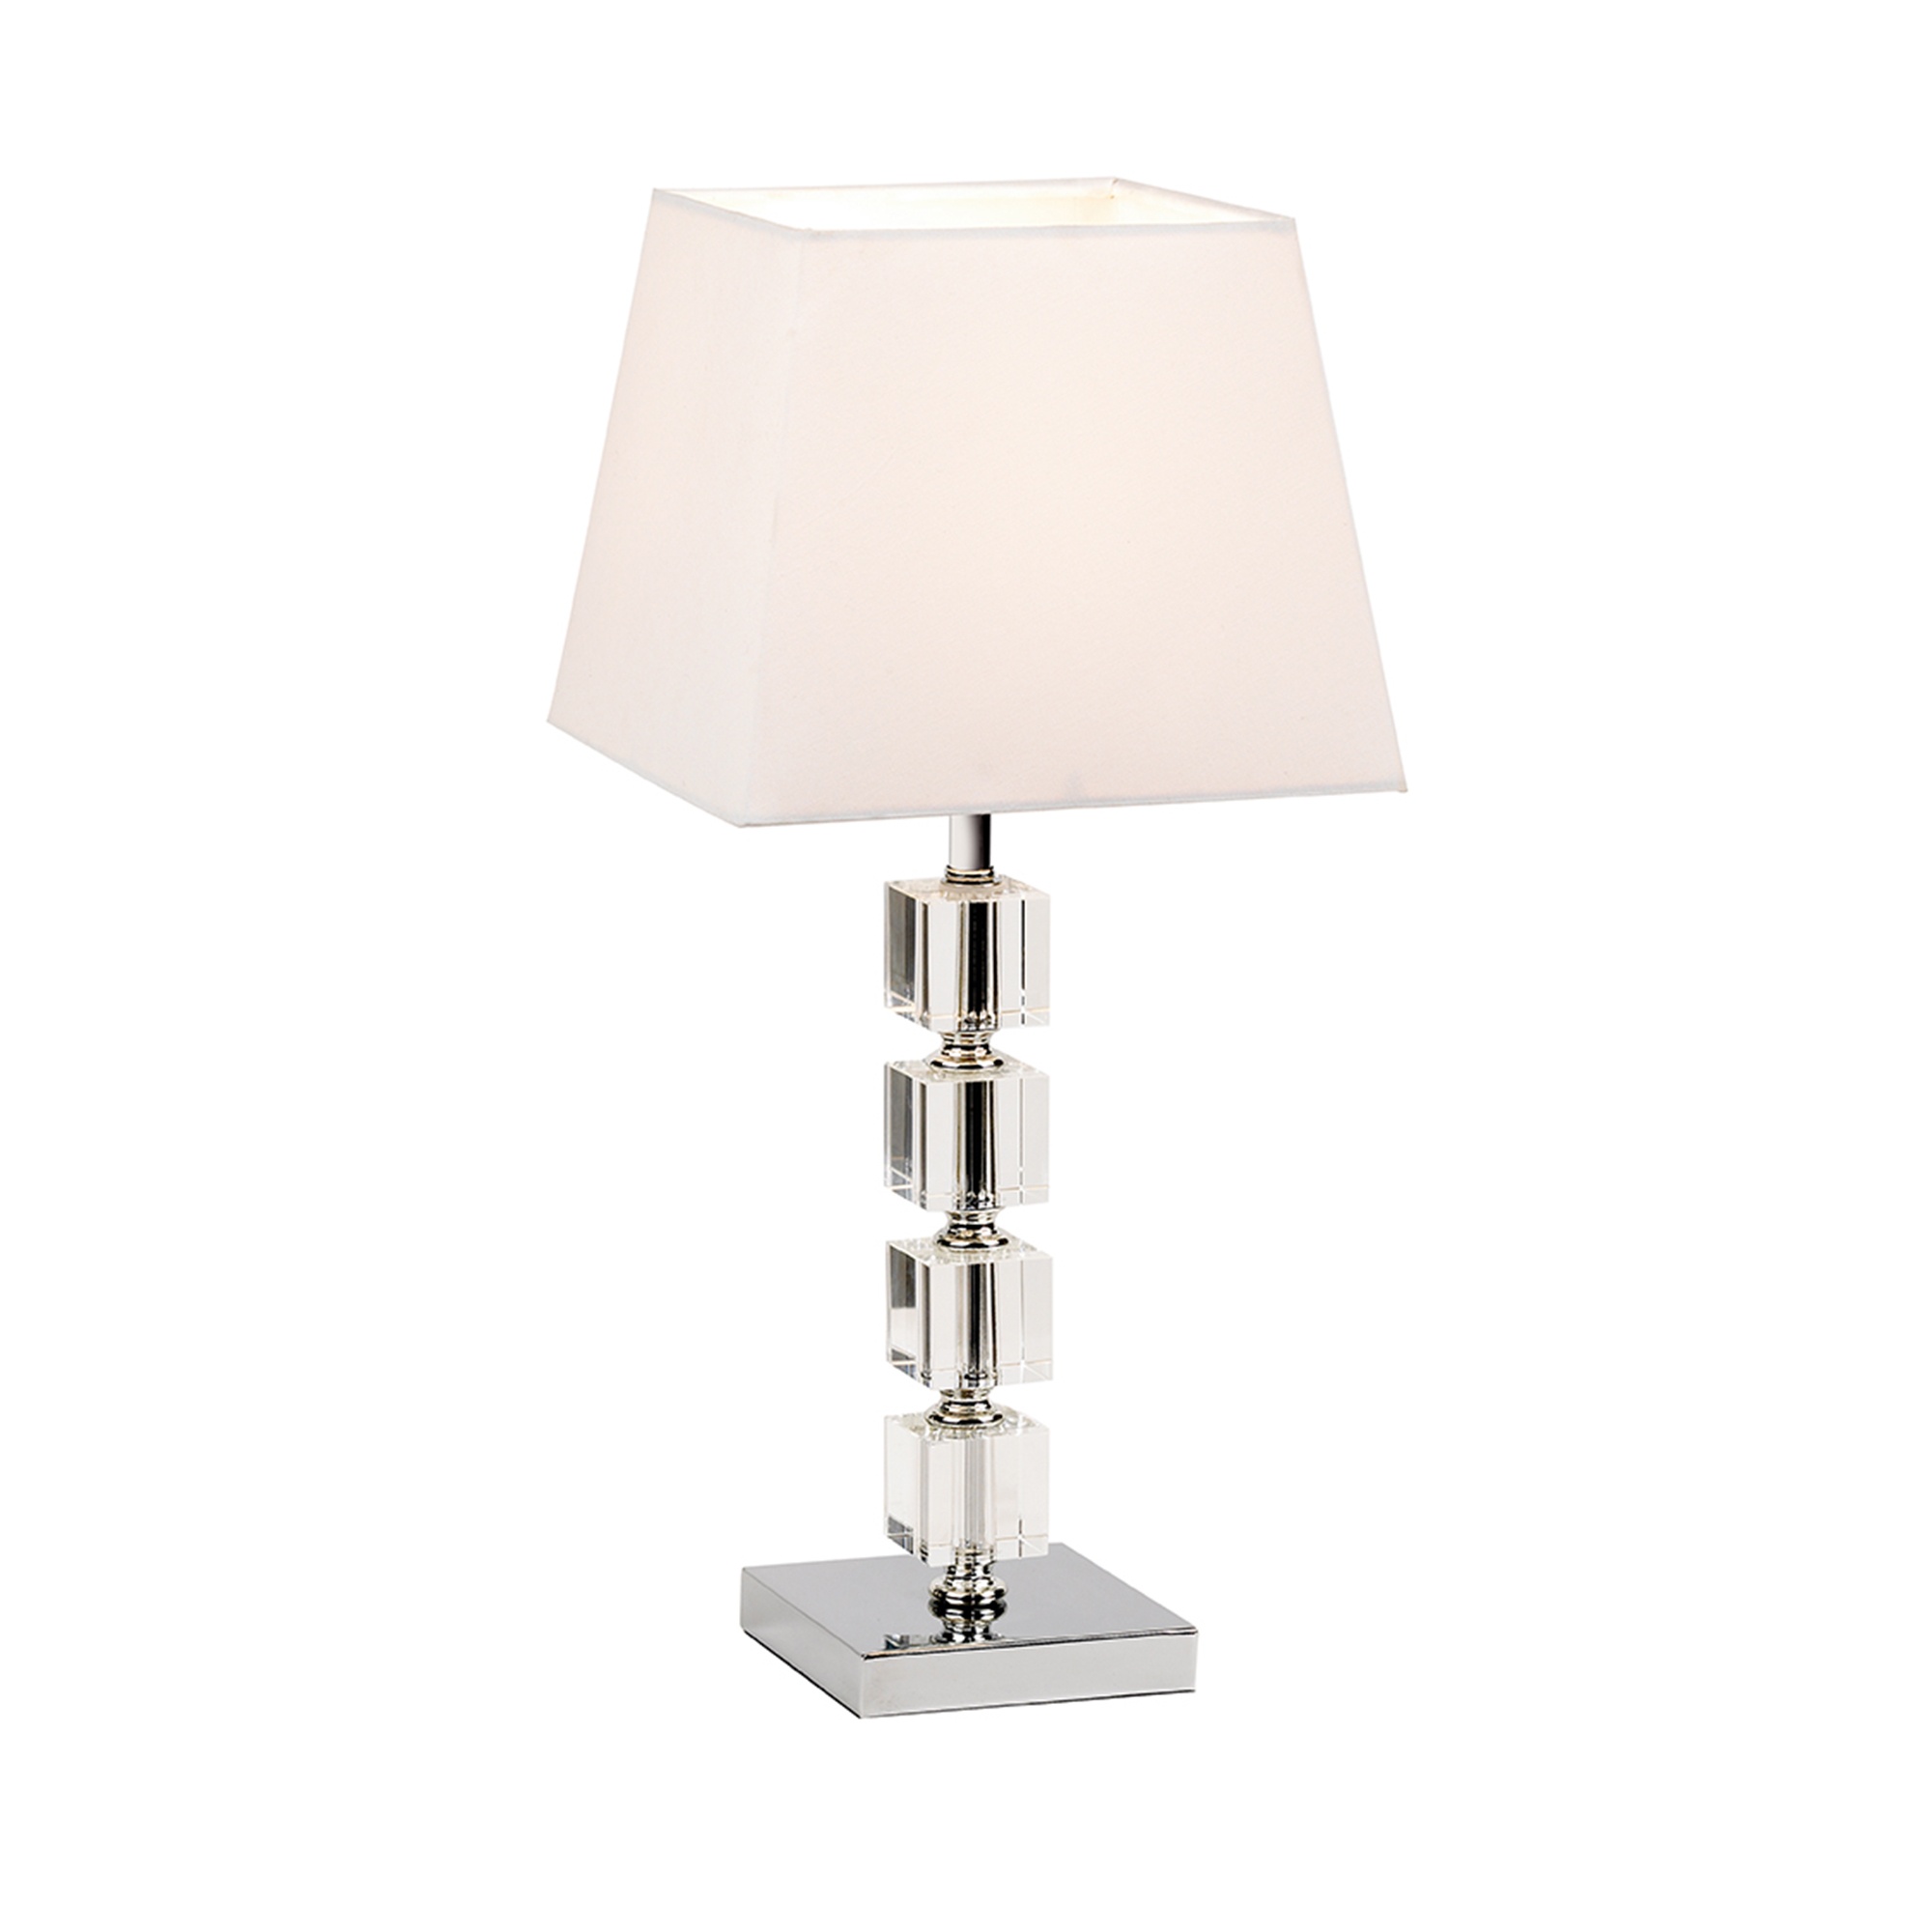 Lighting Chrome Acrylic Table Lamp, White Acrylic Lamp Shade